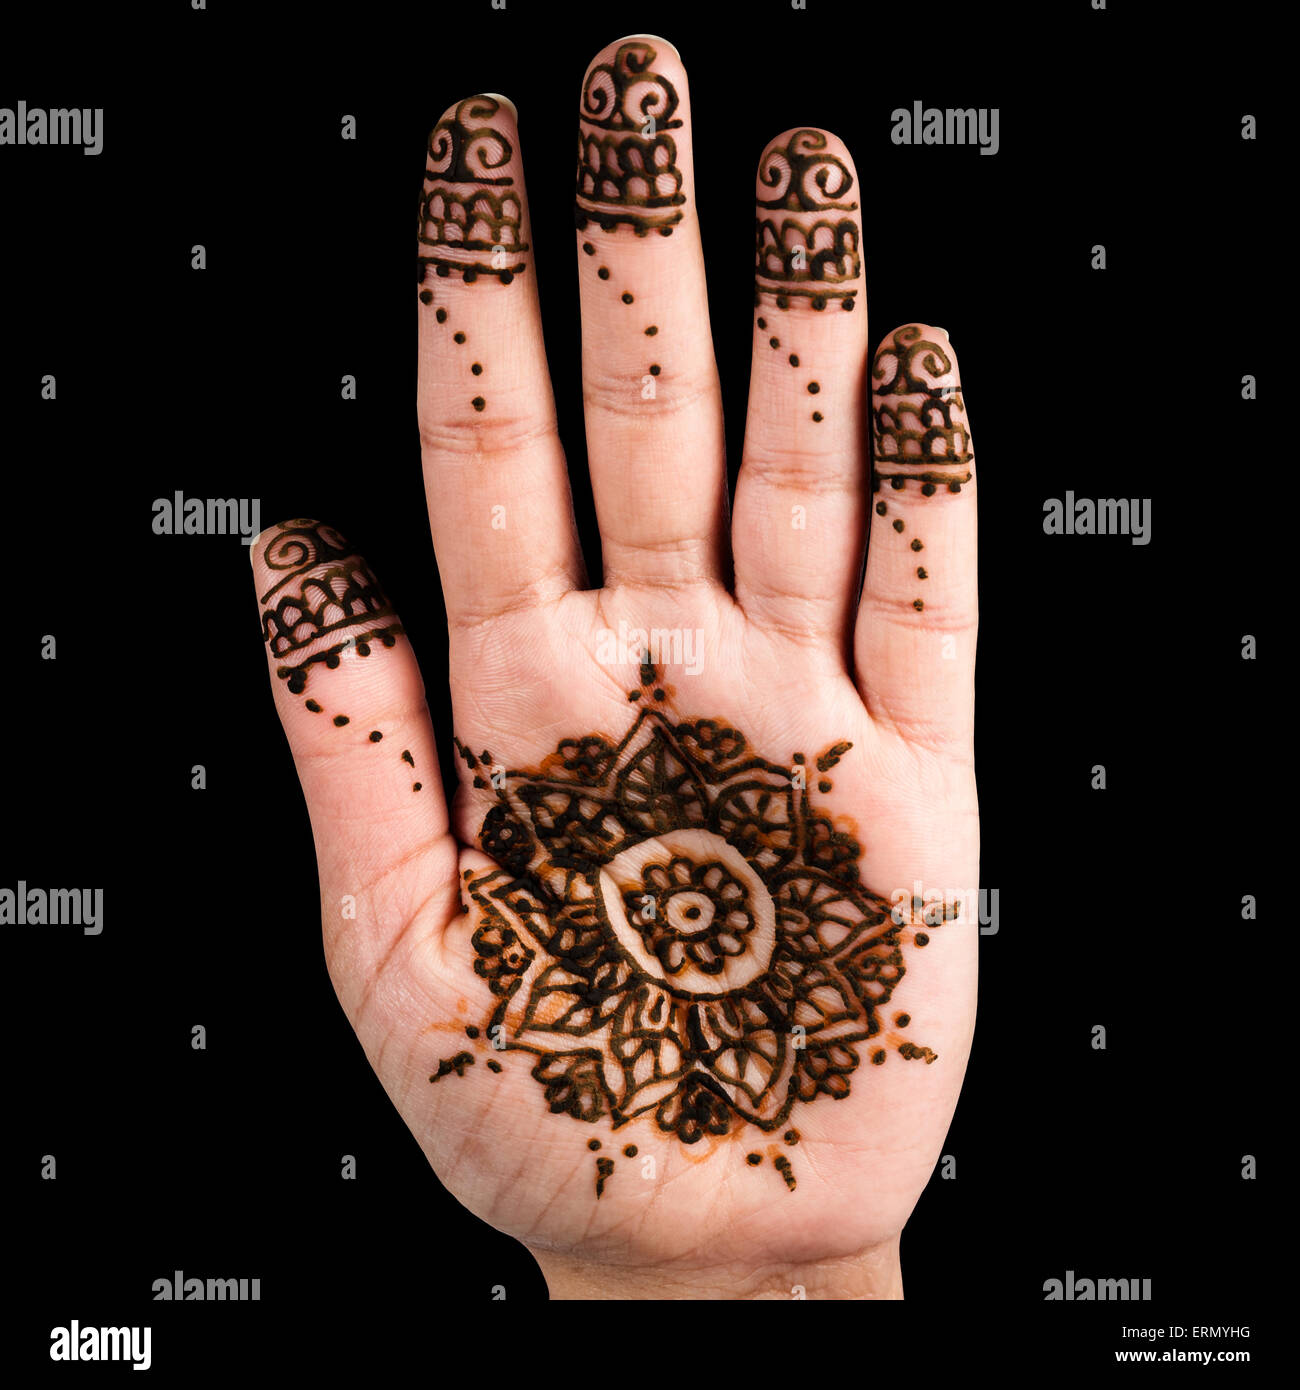 Henna hand tattoo decoration art clipping path square Stock Photo